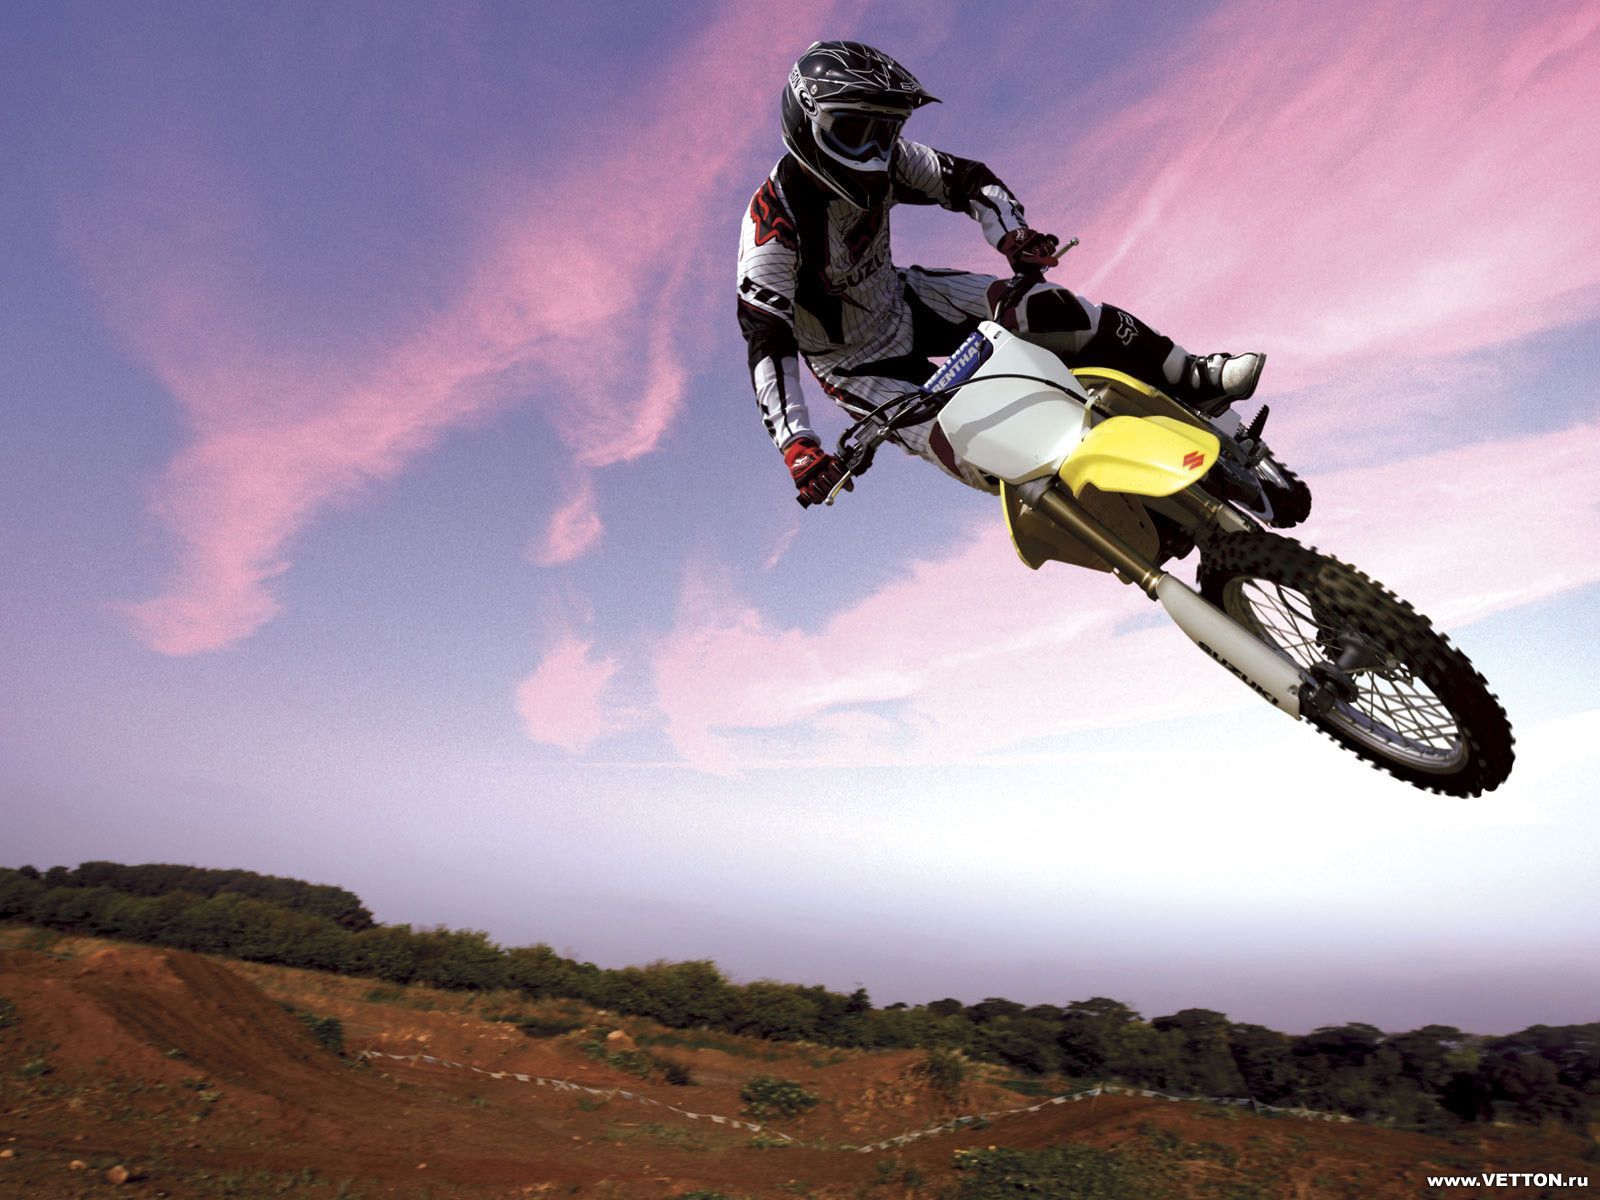 vertical wallpaper motocross, sports